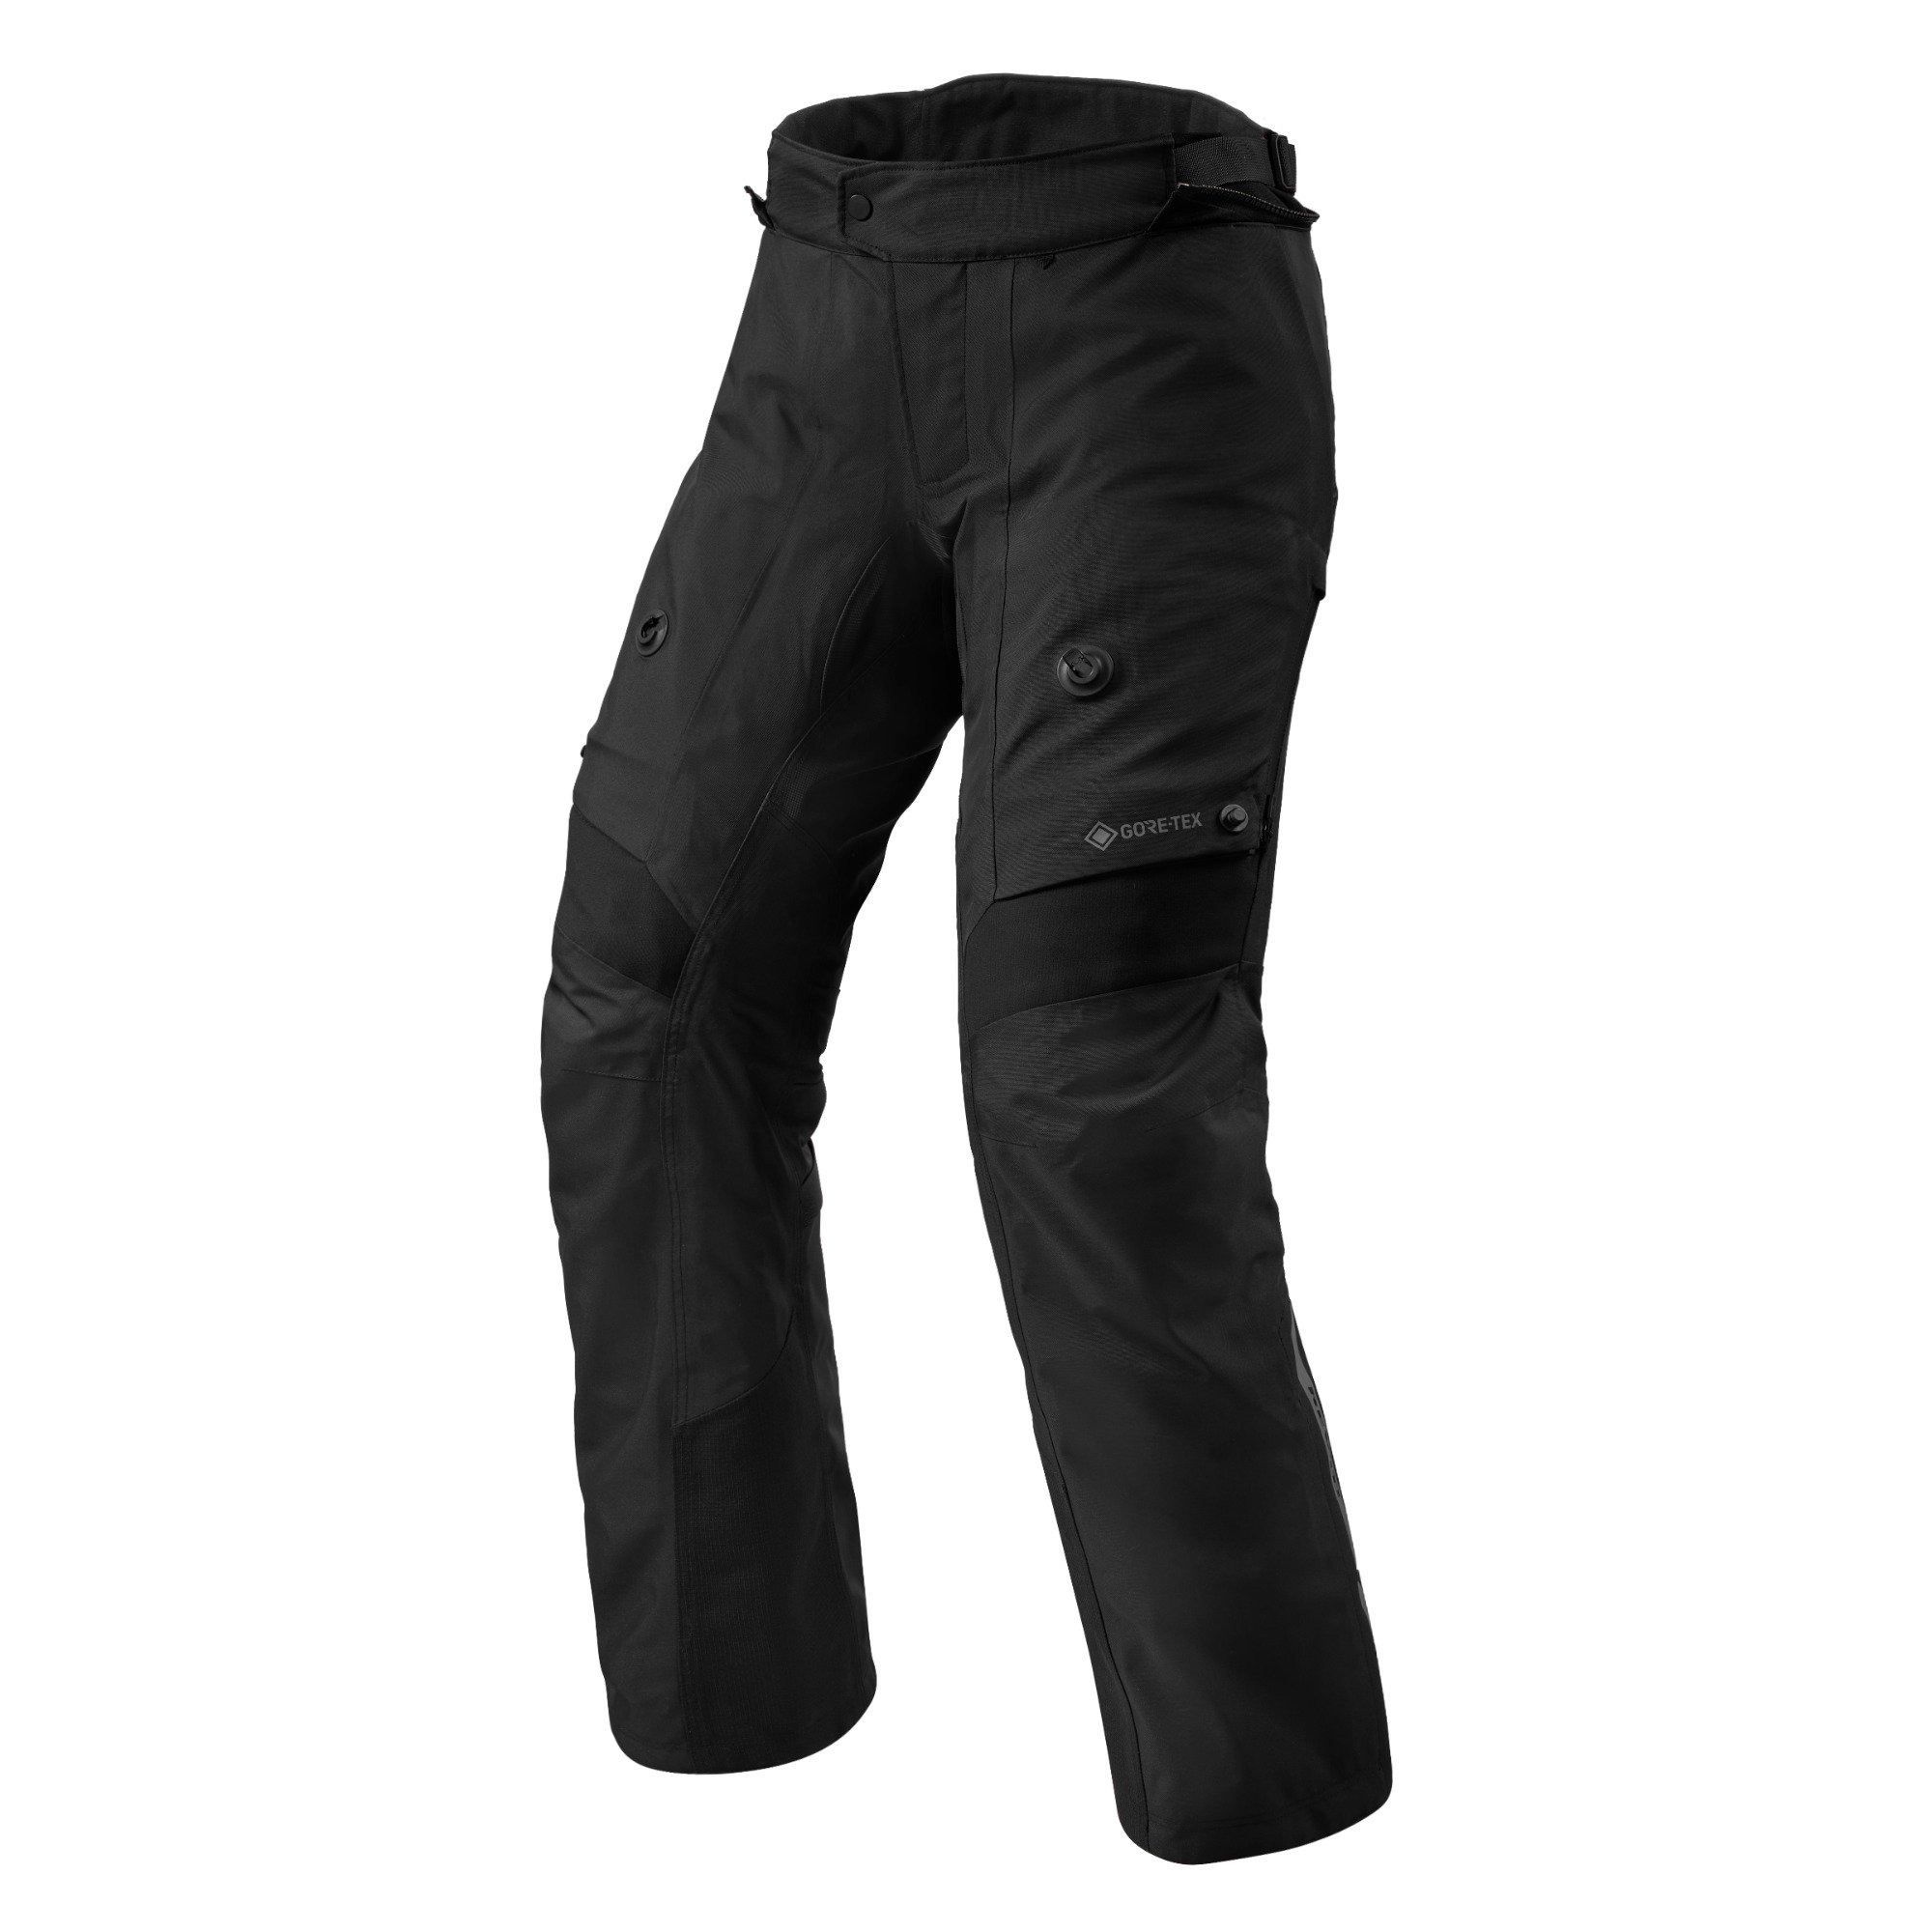 Image of REV'IT! Pants Poseidon 3 GTX Black Standard Motorcycle Pants Talla 4XL